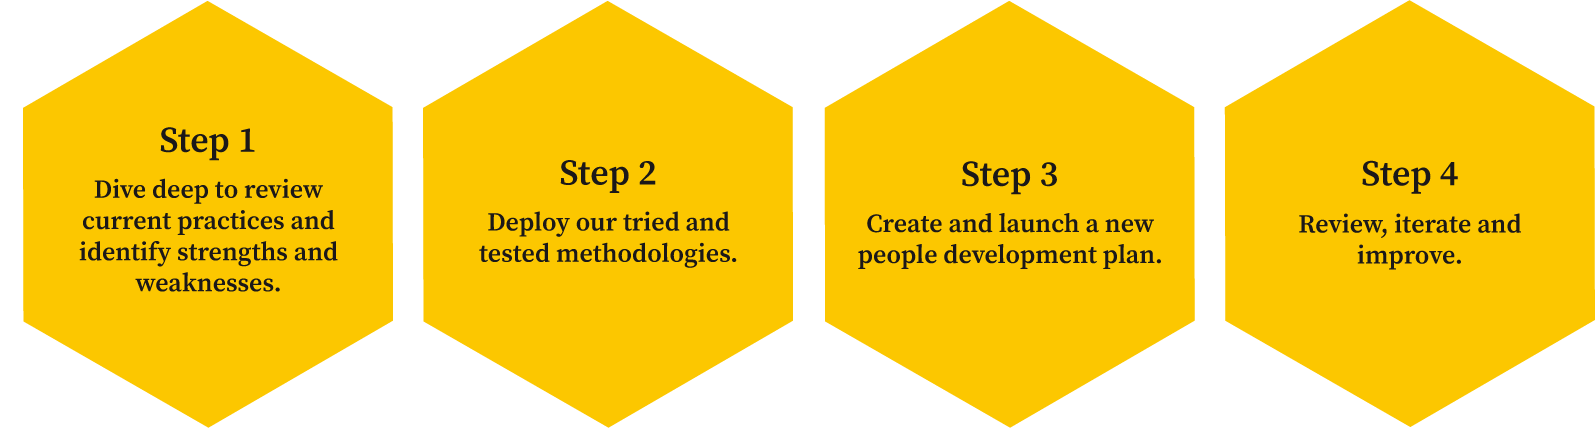 Buzz Business Development - People Management Solutions 4 Steps